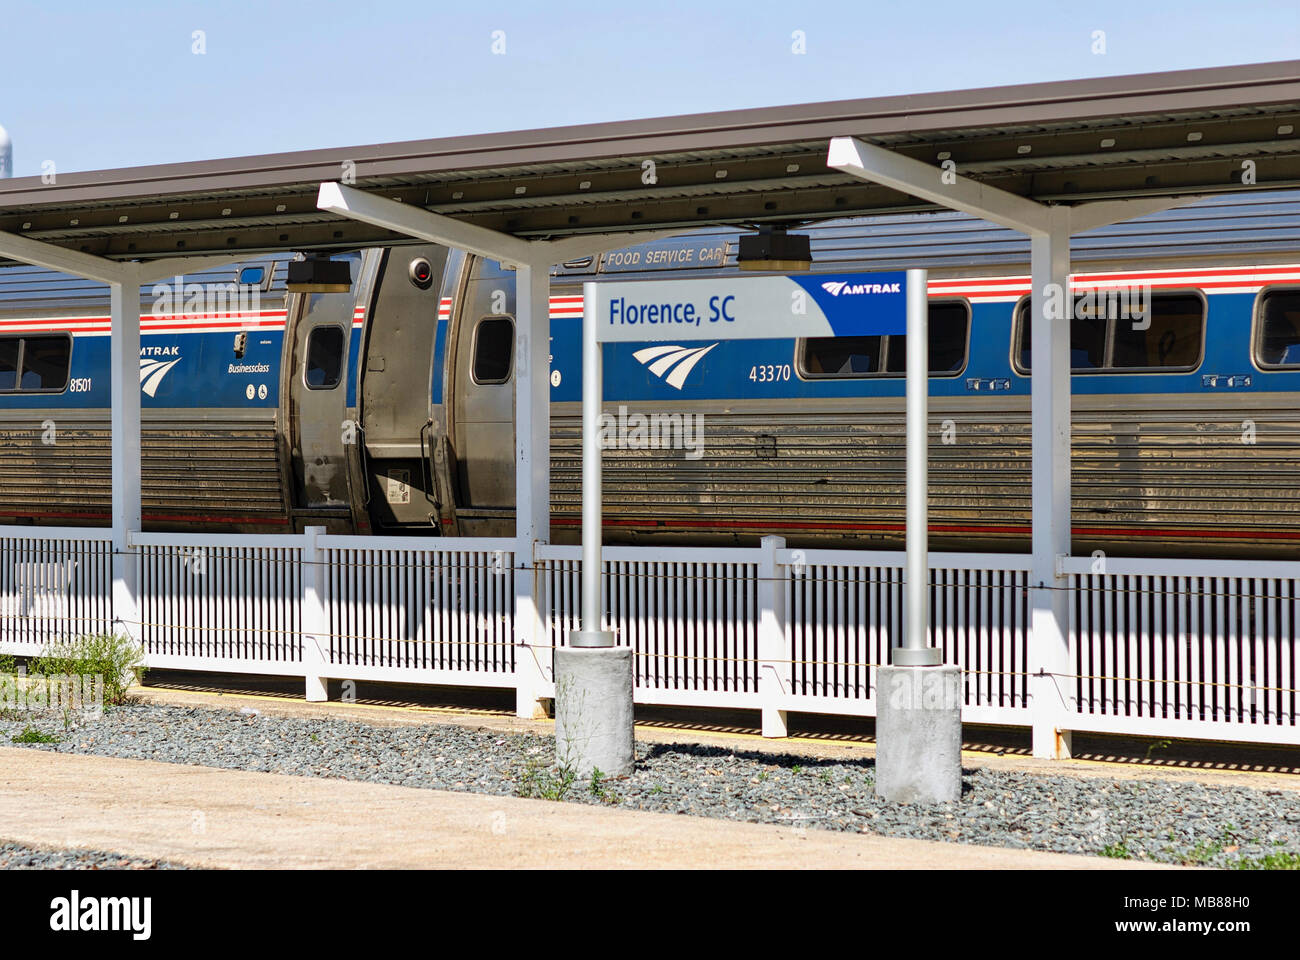 Florence, South Carolina, USA - April 2, 2018: Amtrak's 'Palmetto' train #90 heading north pulls into the Florence, South Carolina, Amtrak station. Stock Photo